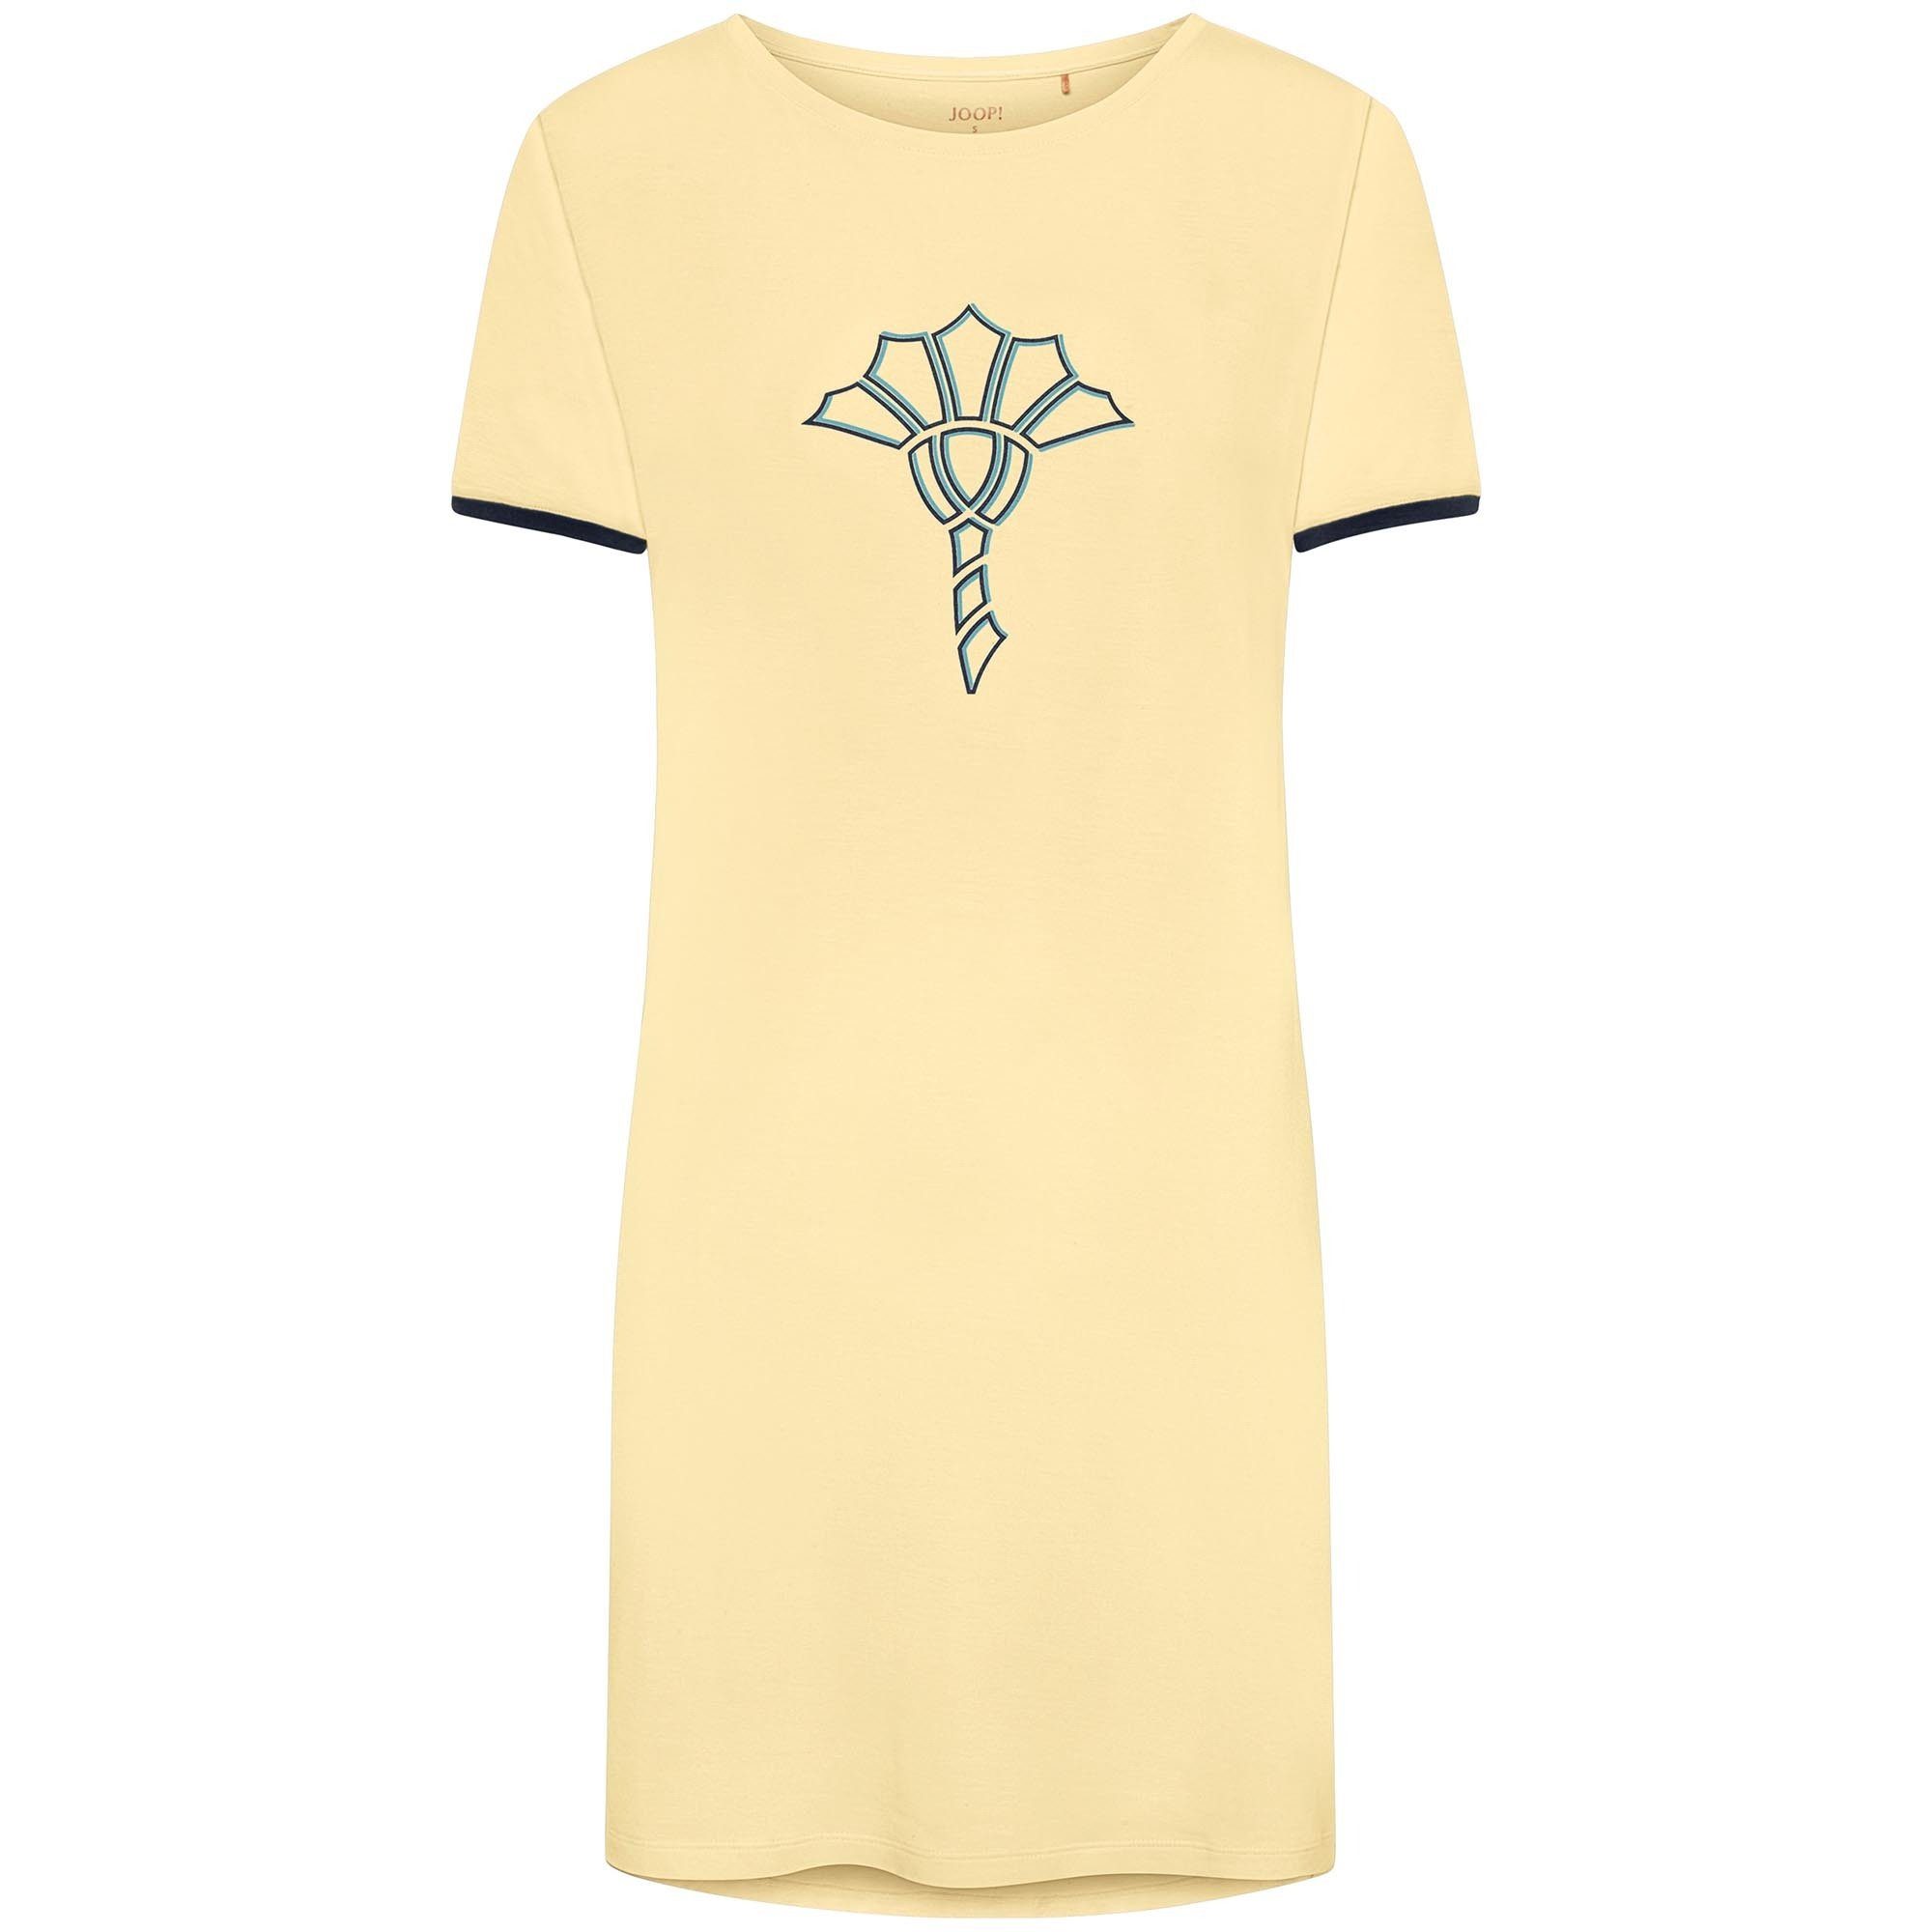 Nachthemd Sleepshirt, Nachthemd Damen - Gelb Kurzarm Joop! Bigshirt,